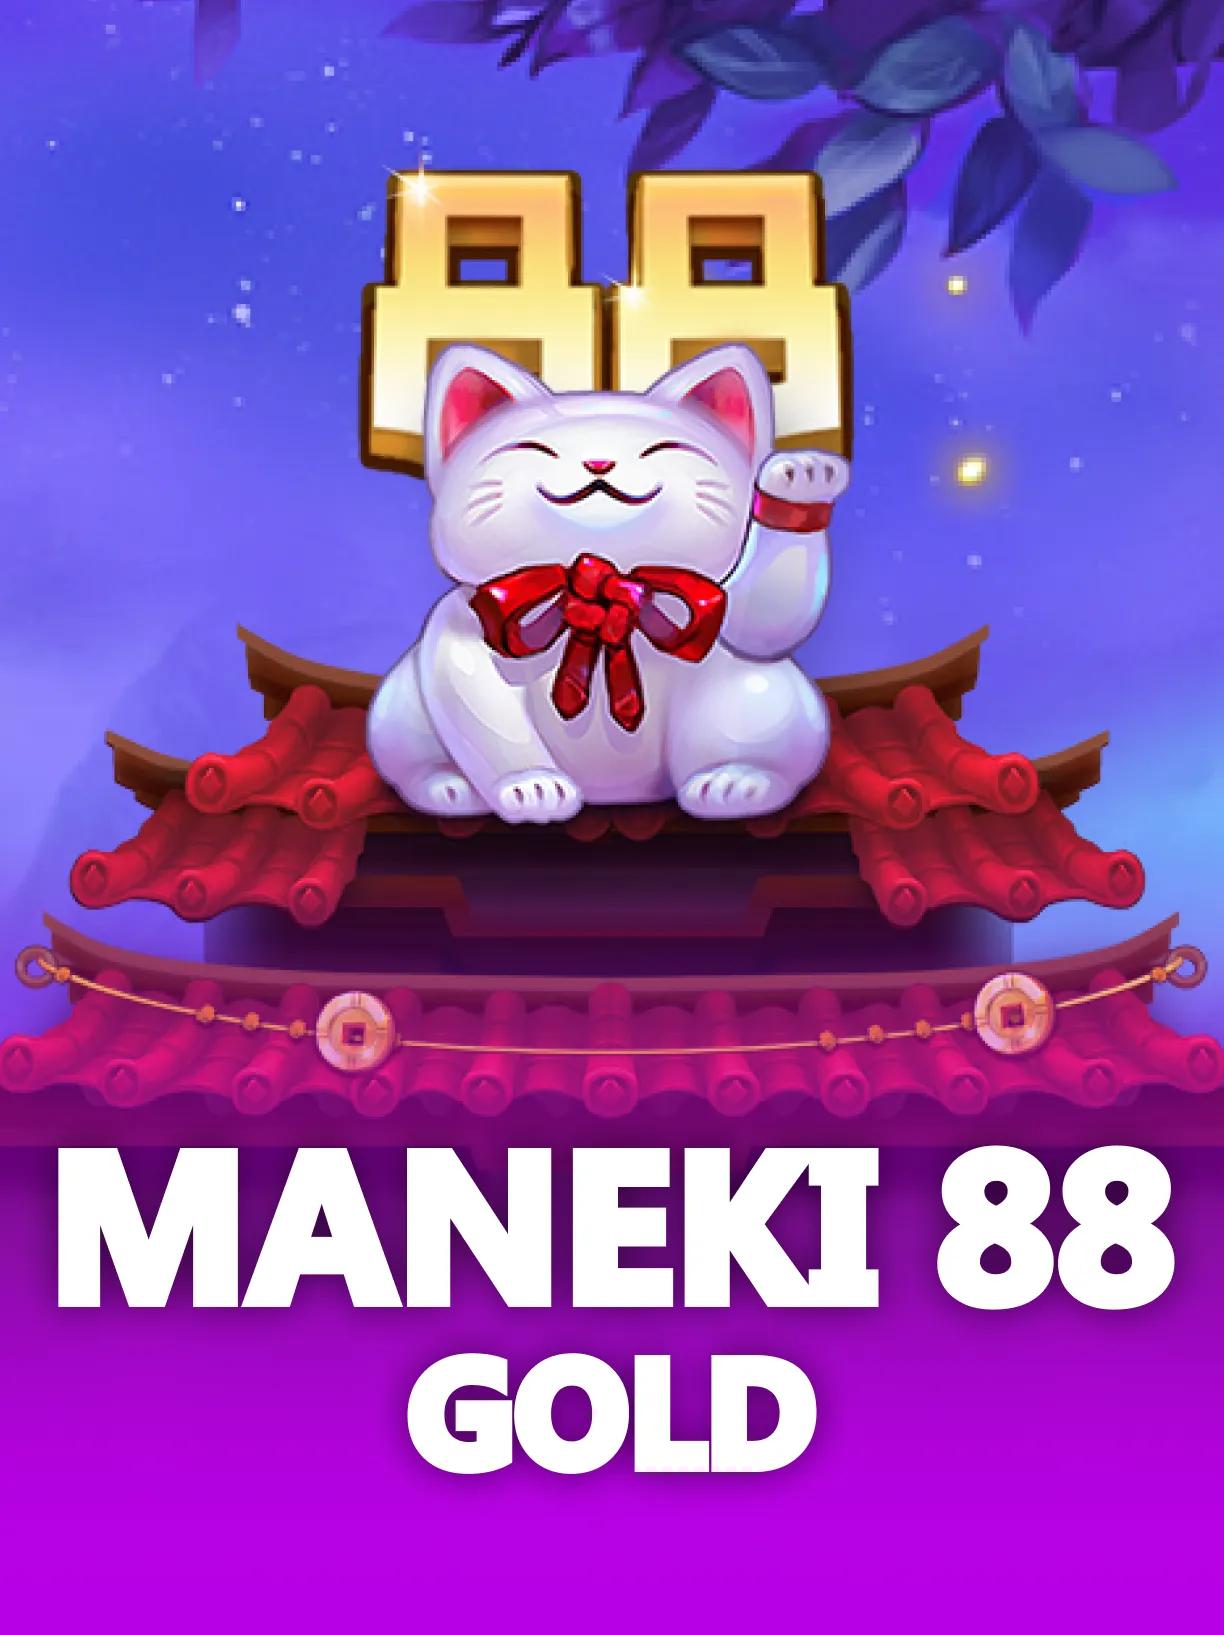 Maneki_88_Gold_square.webp